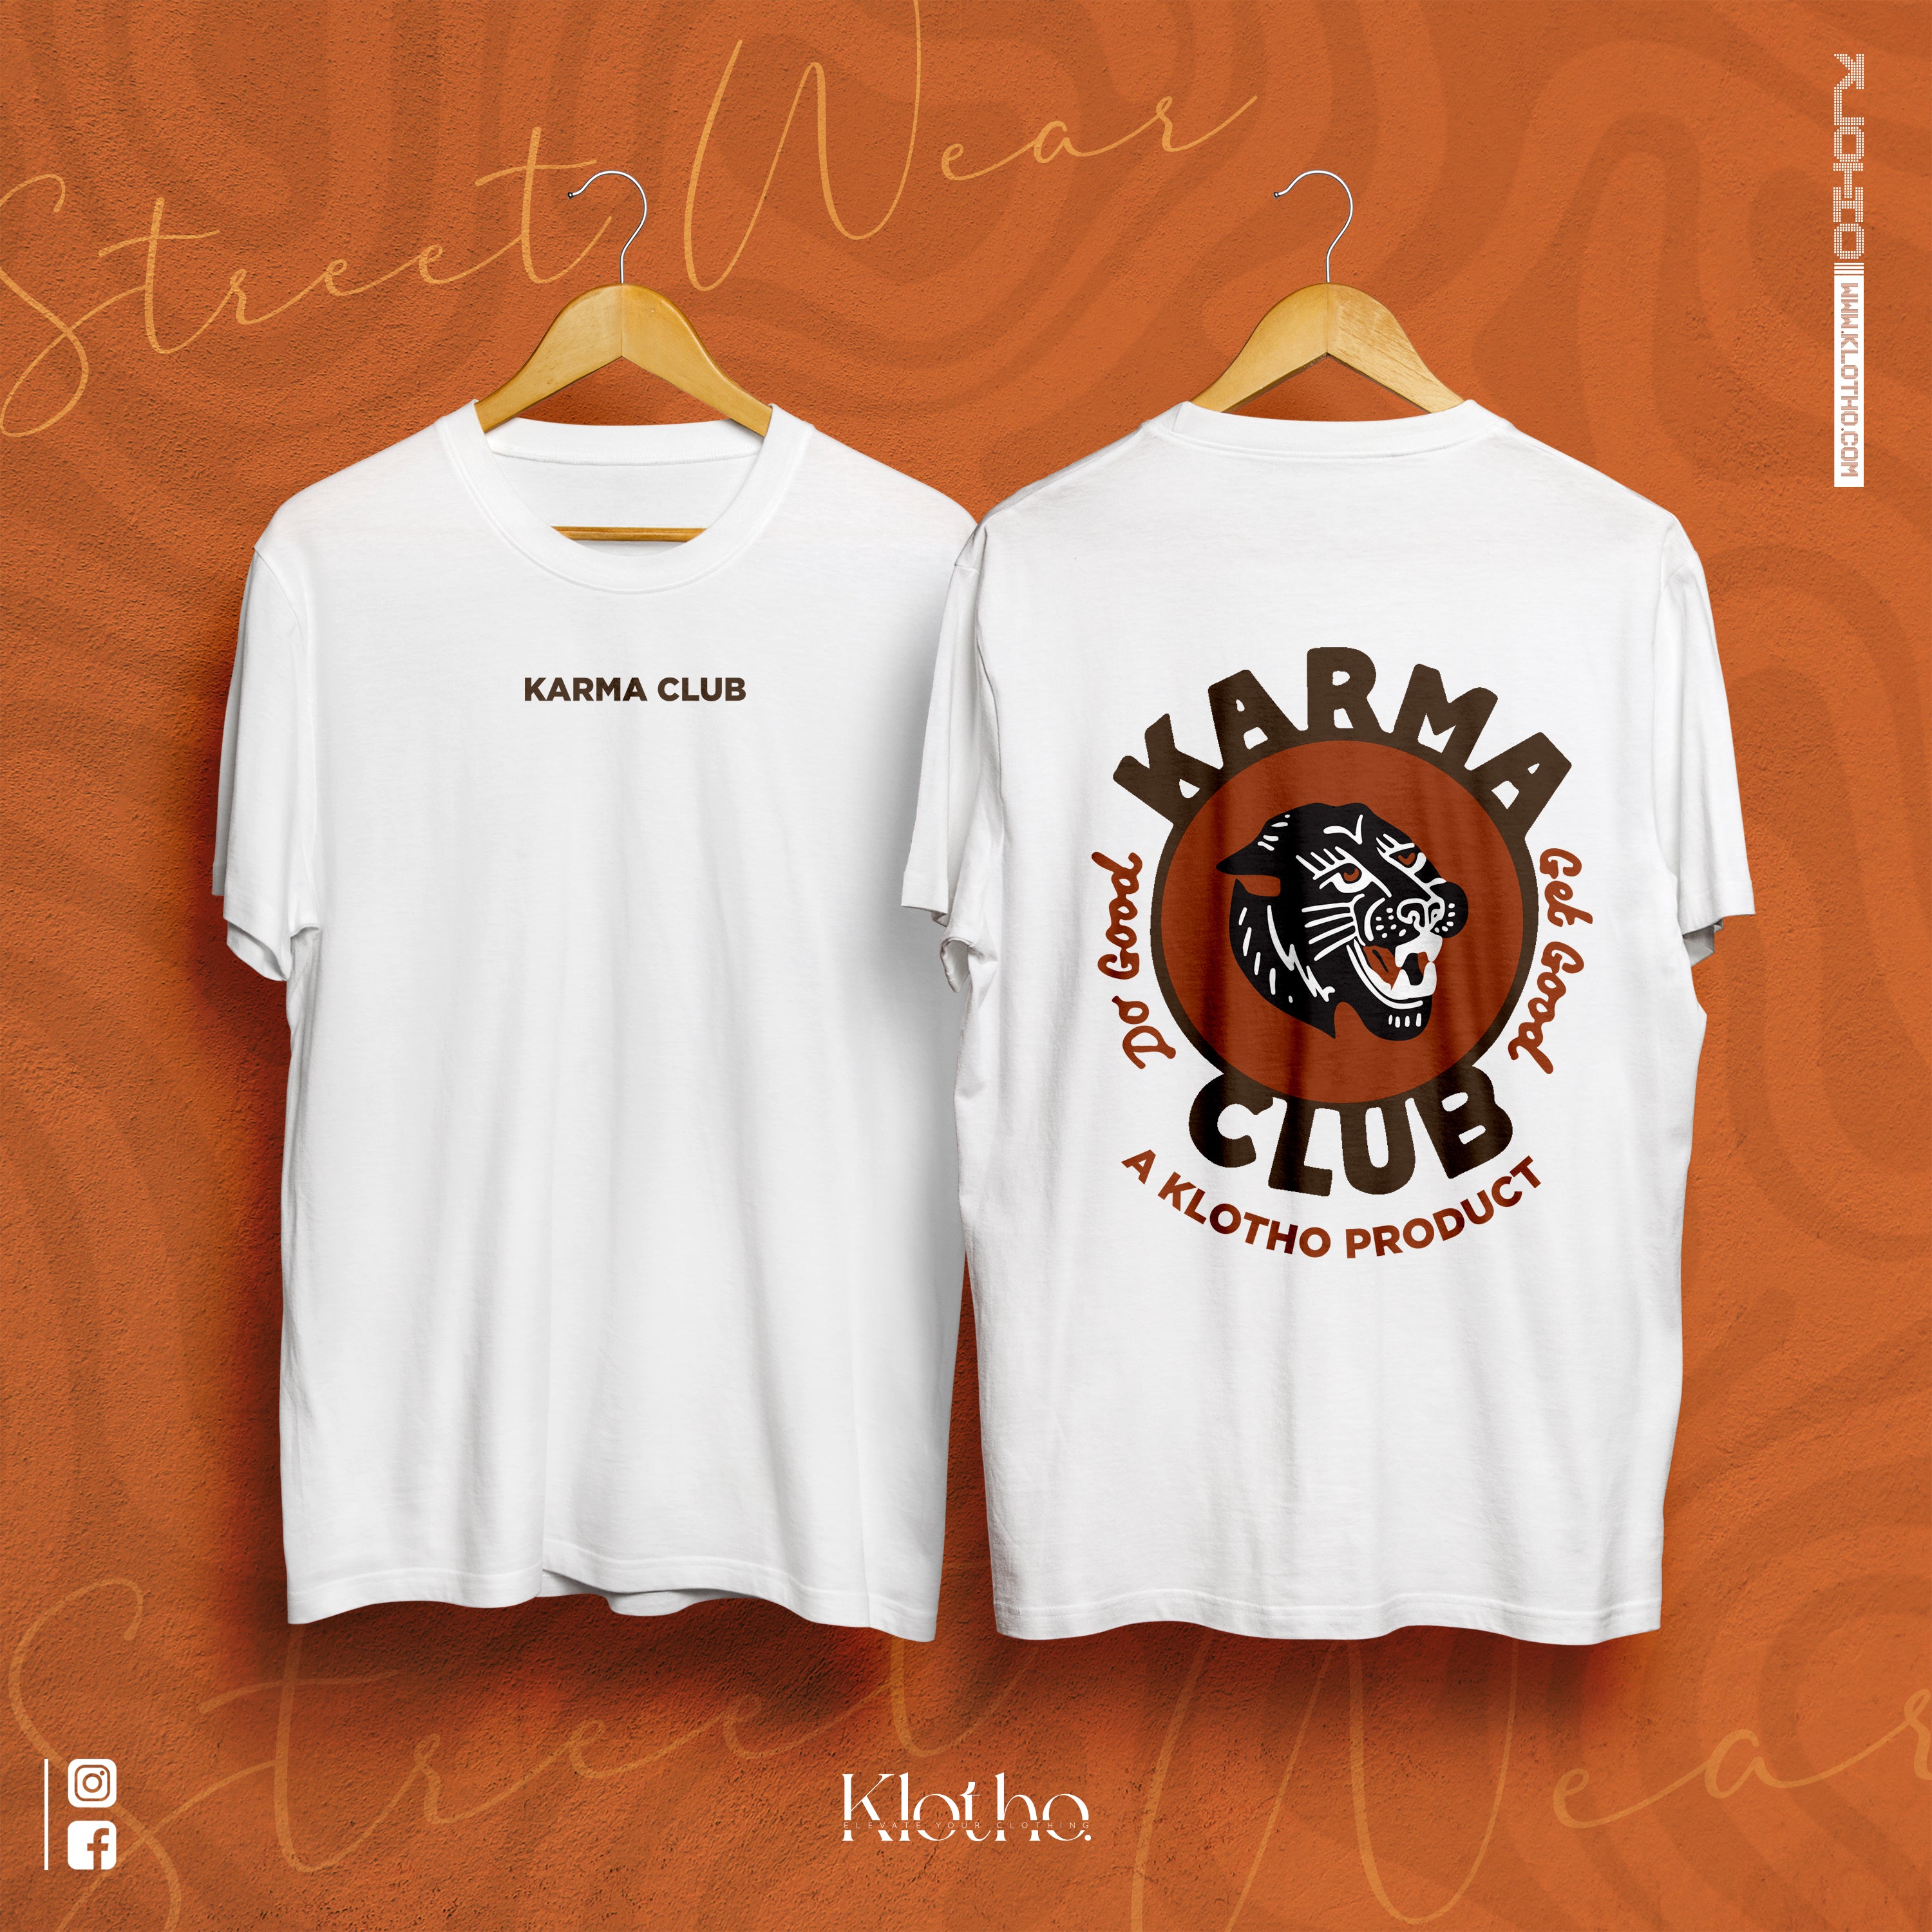 Karma Club - Men's Graphic Tee